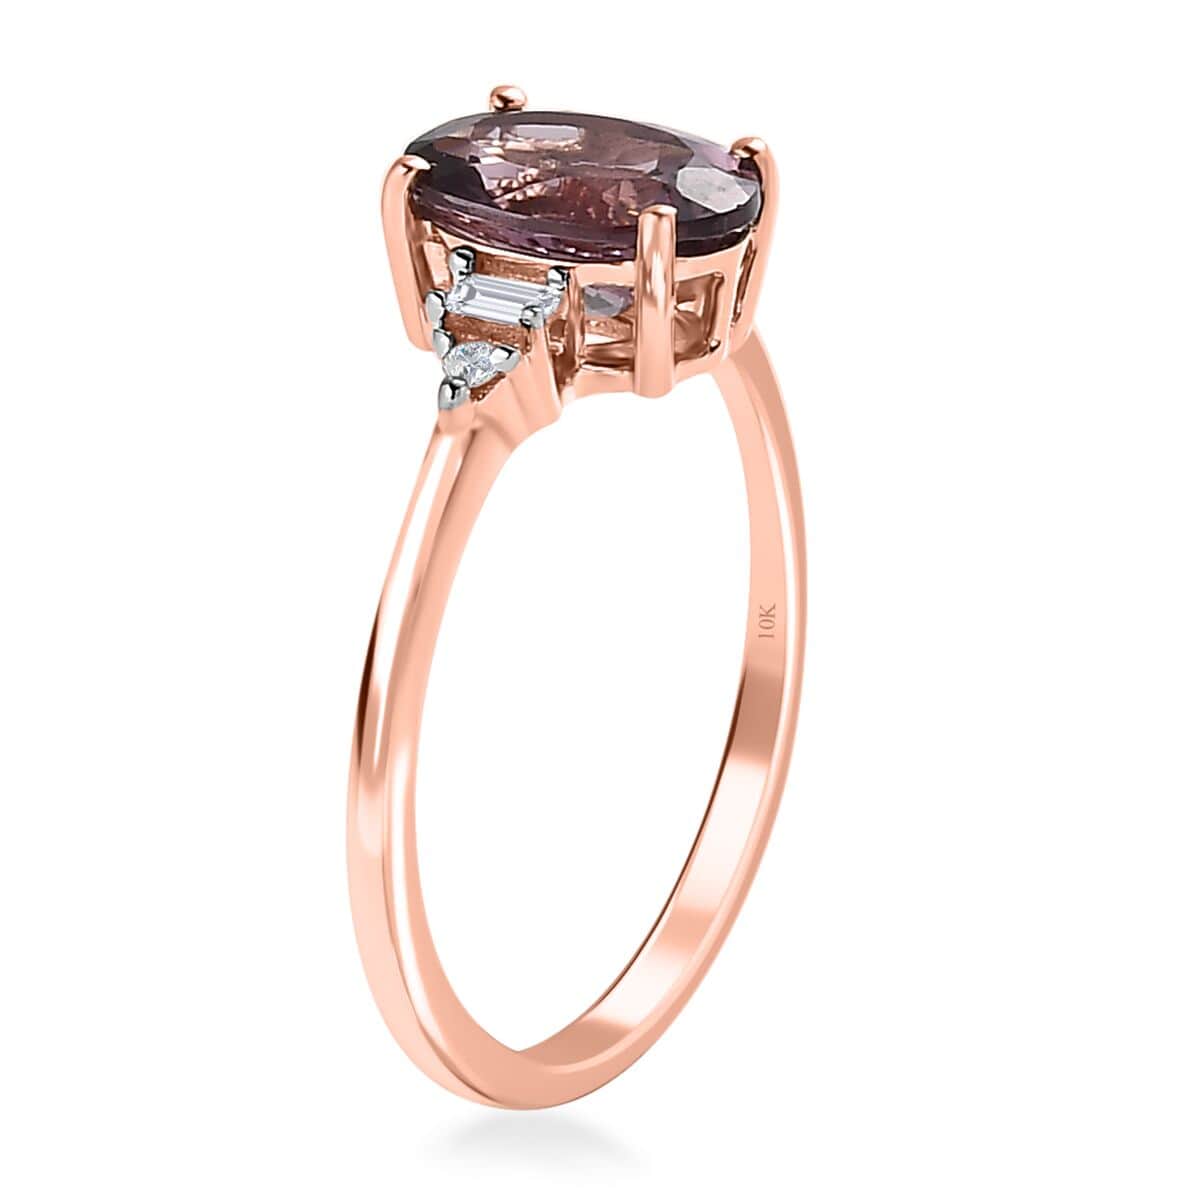 Luxoro 10K Rose Gold Premium Narsipatnam Purple Spinel and G-H I3 Diamond Ring (Size 8.0) 1.75 ctw image number 3